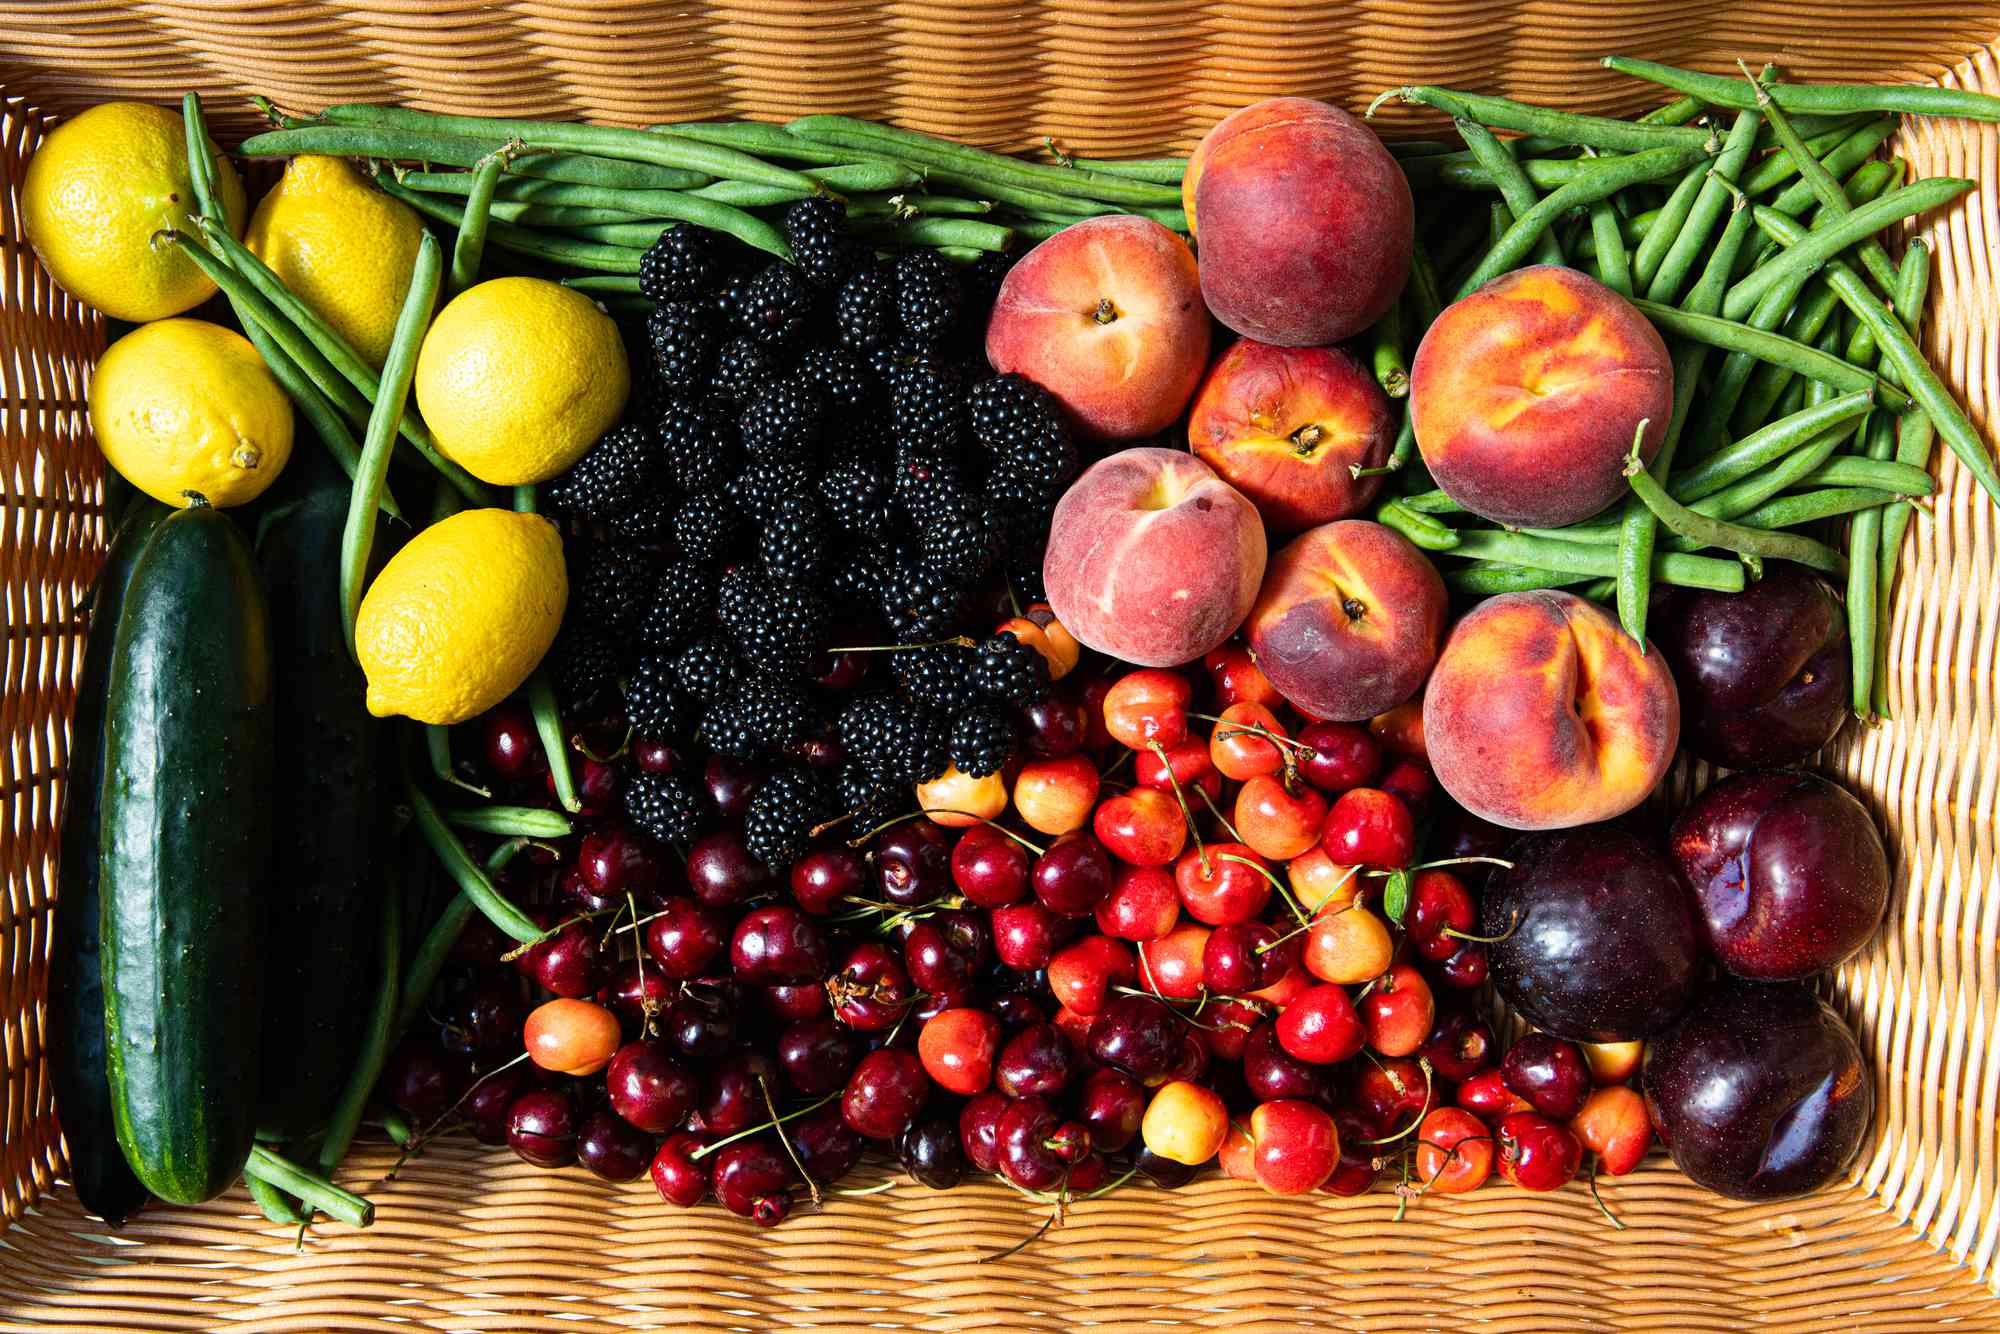 Basket of fruit and vegetables